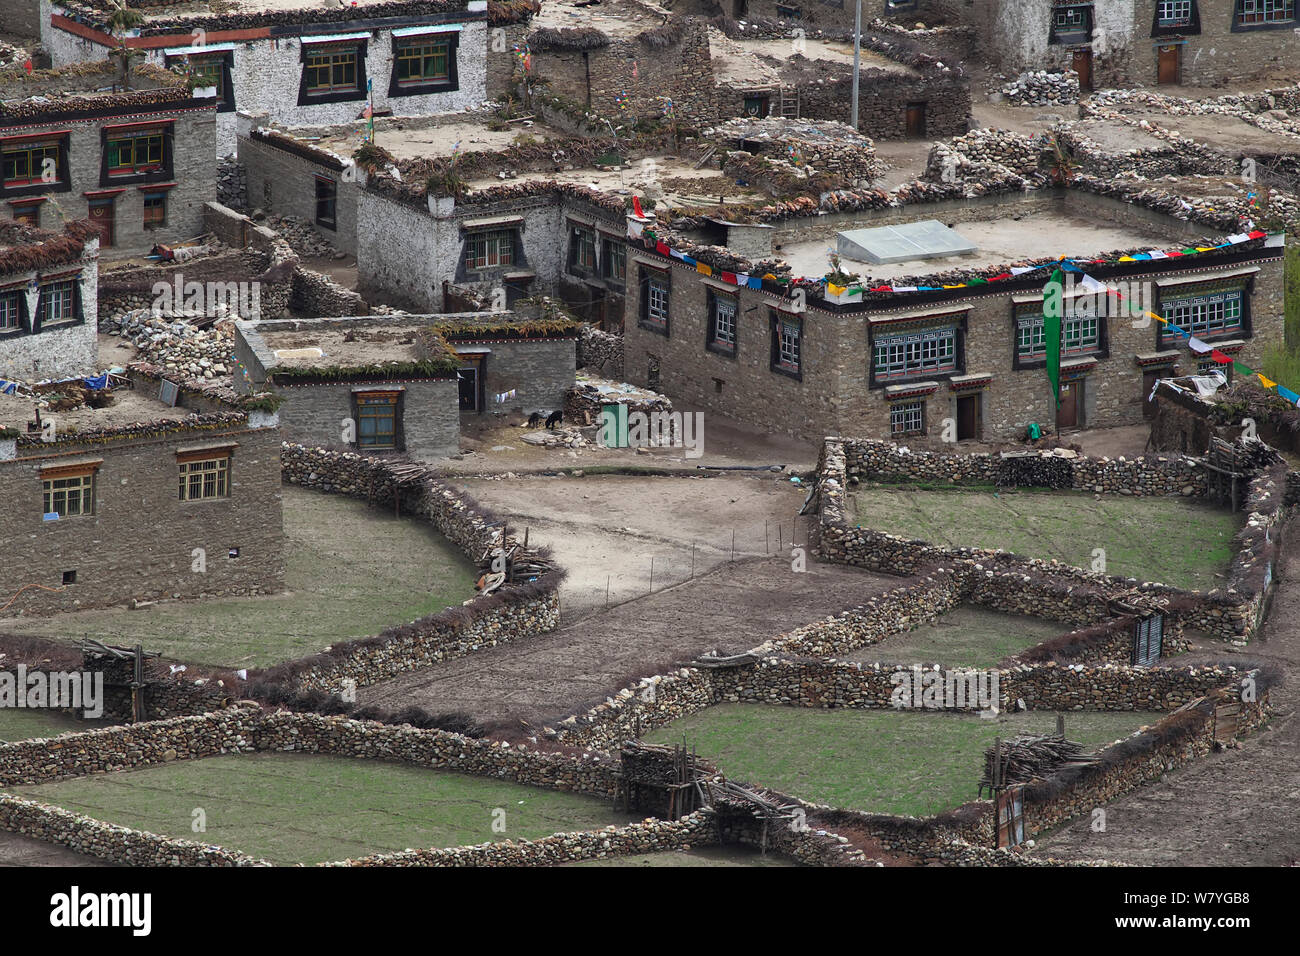 Tradizionalmente costruite case e muri in pietra a secco, Makalu Mountain, Mount Qomolangma National Park, Dingjie County, Tibet, Cina, maggio 2013. Foto Stock